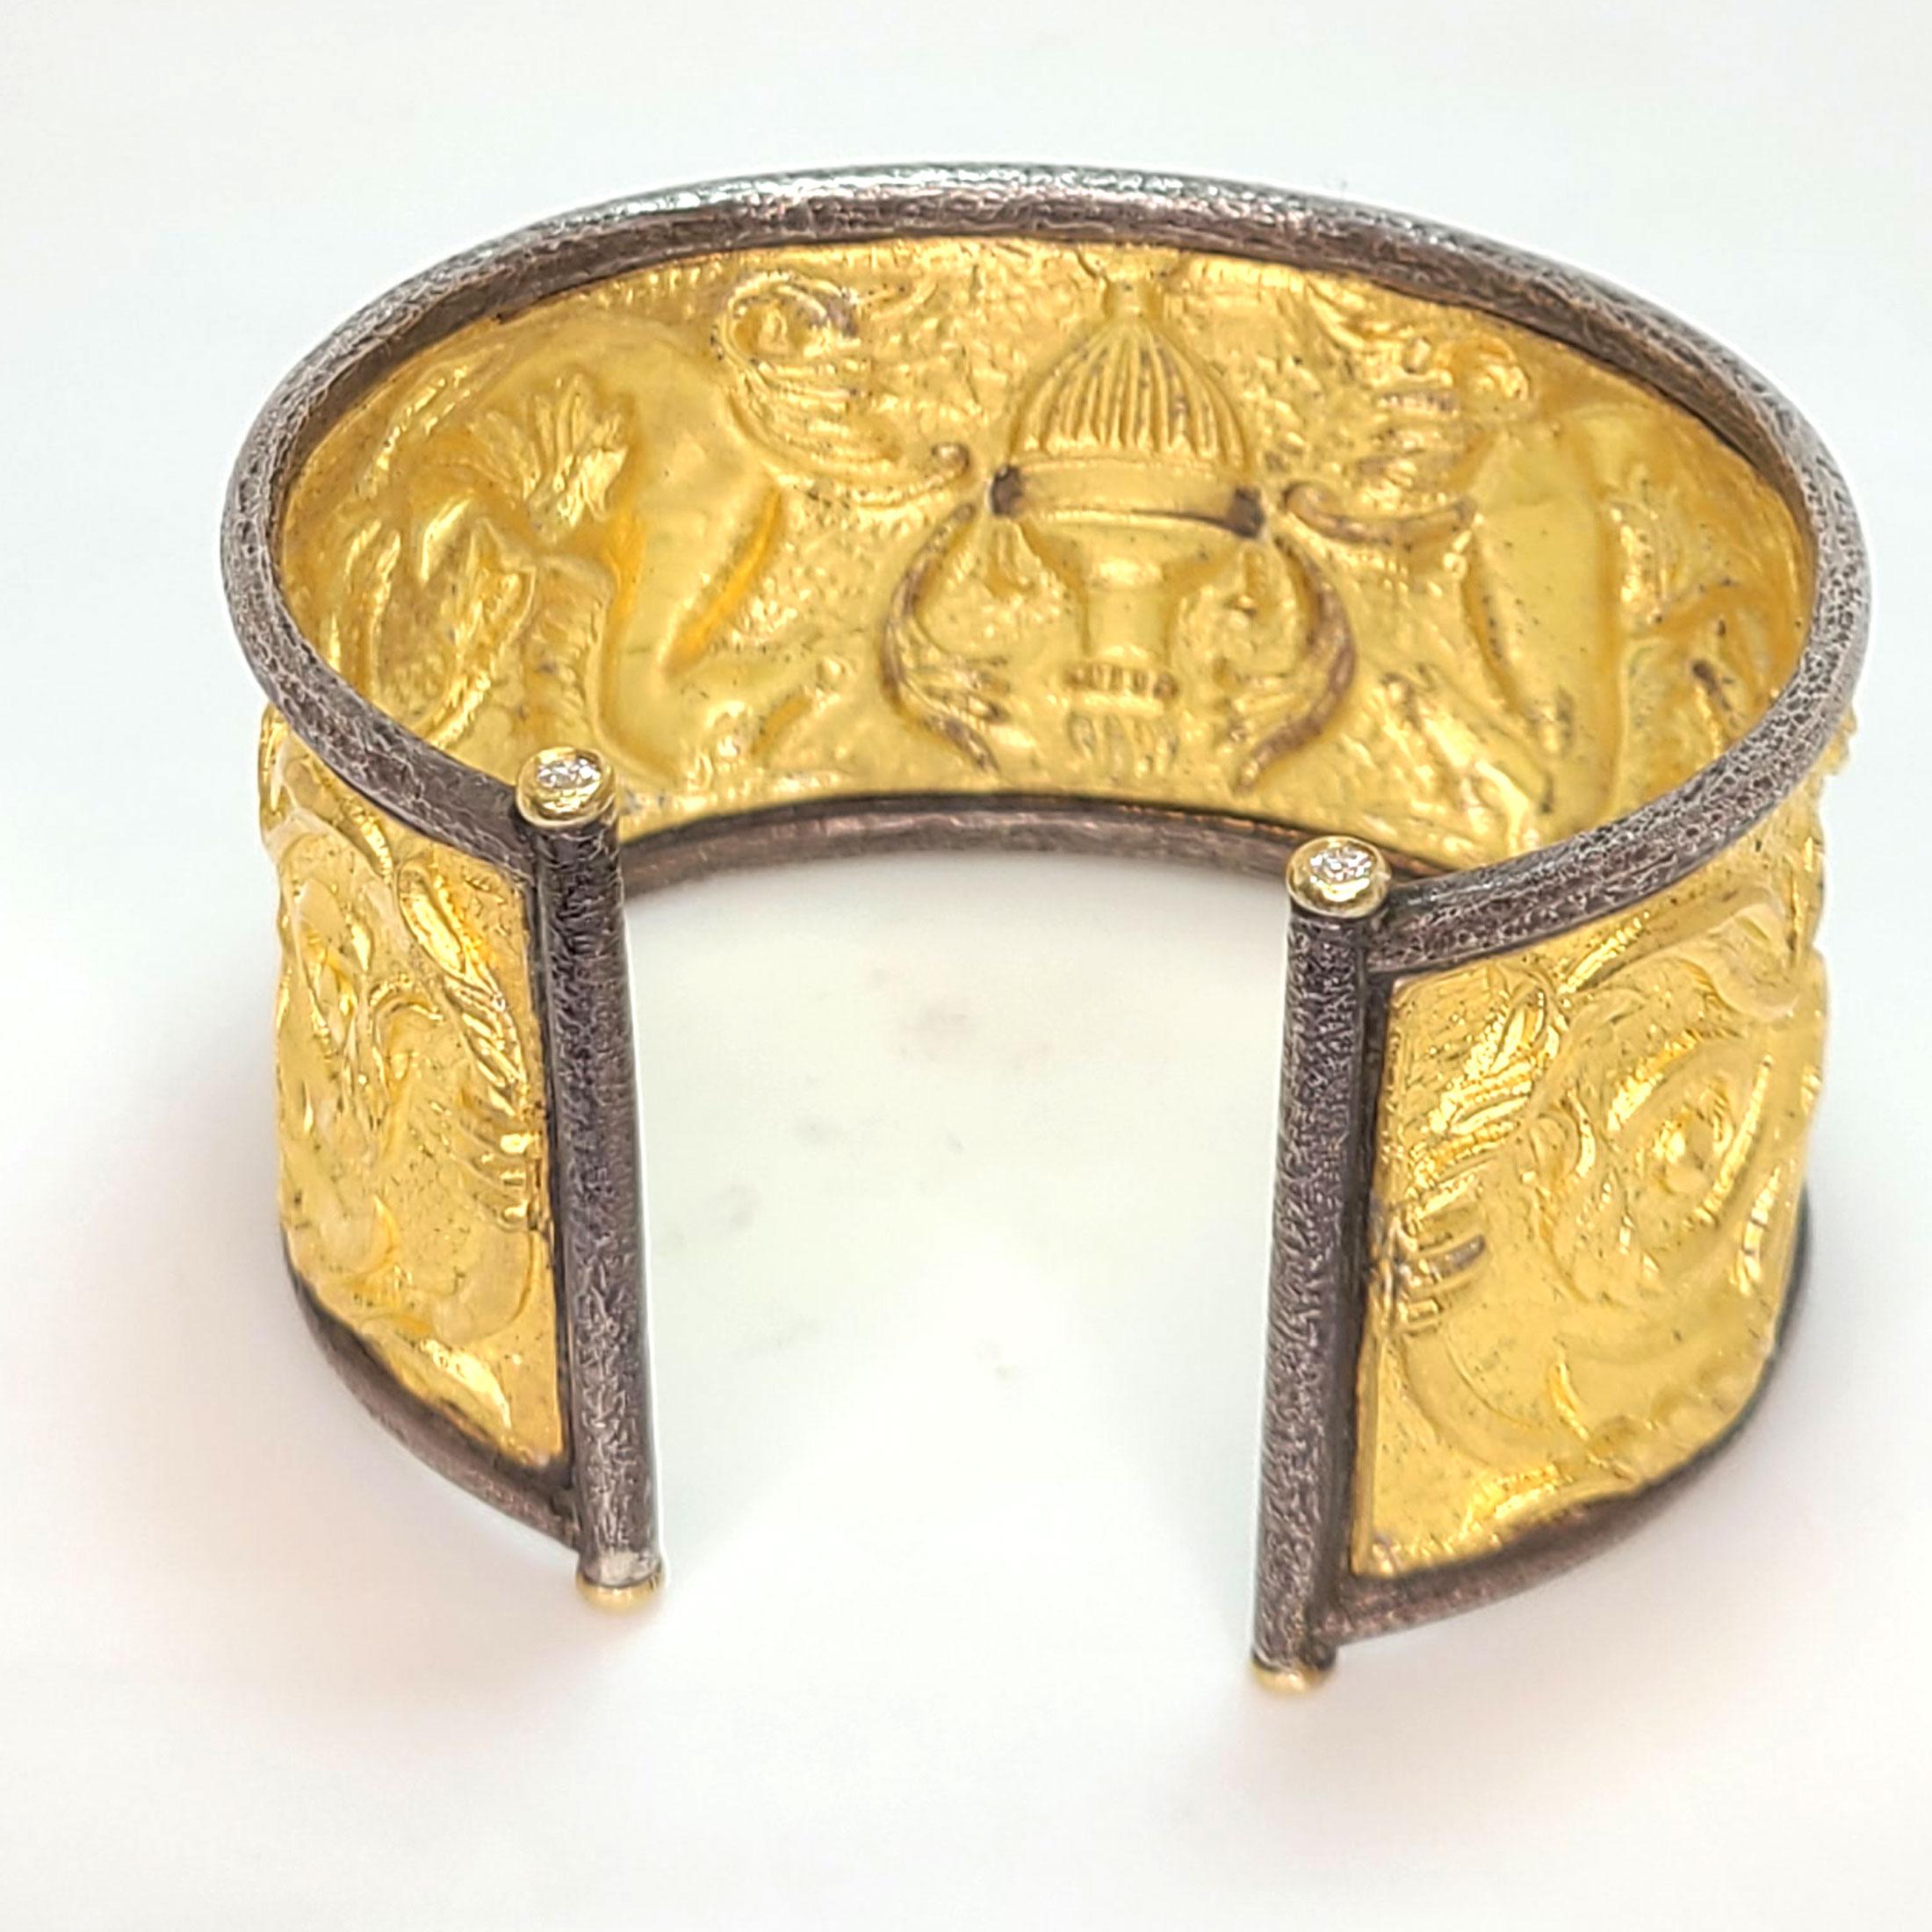 24k gold cuff bracelet